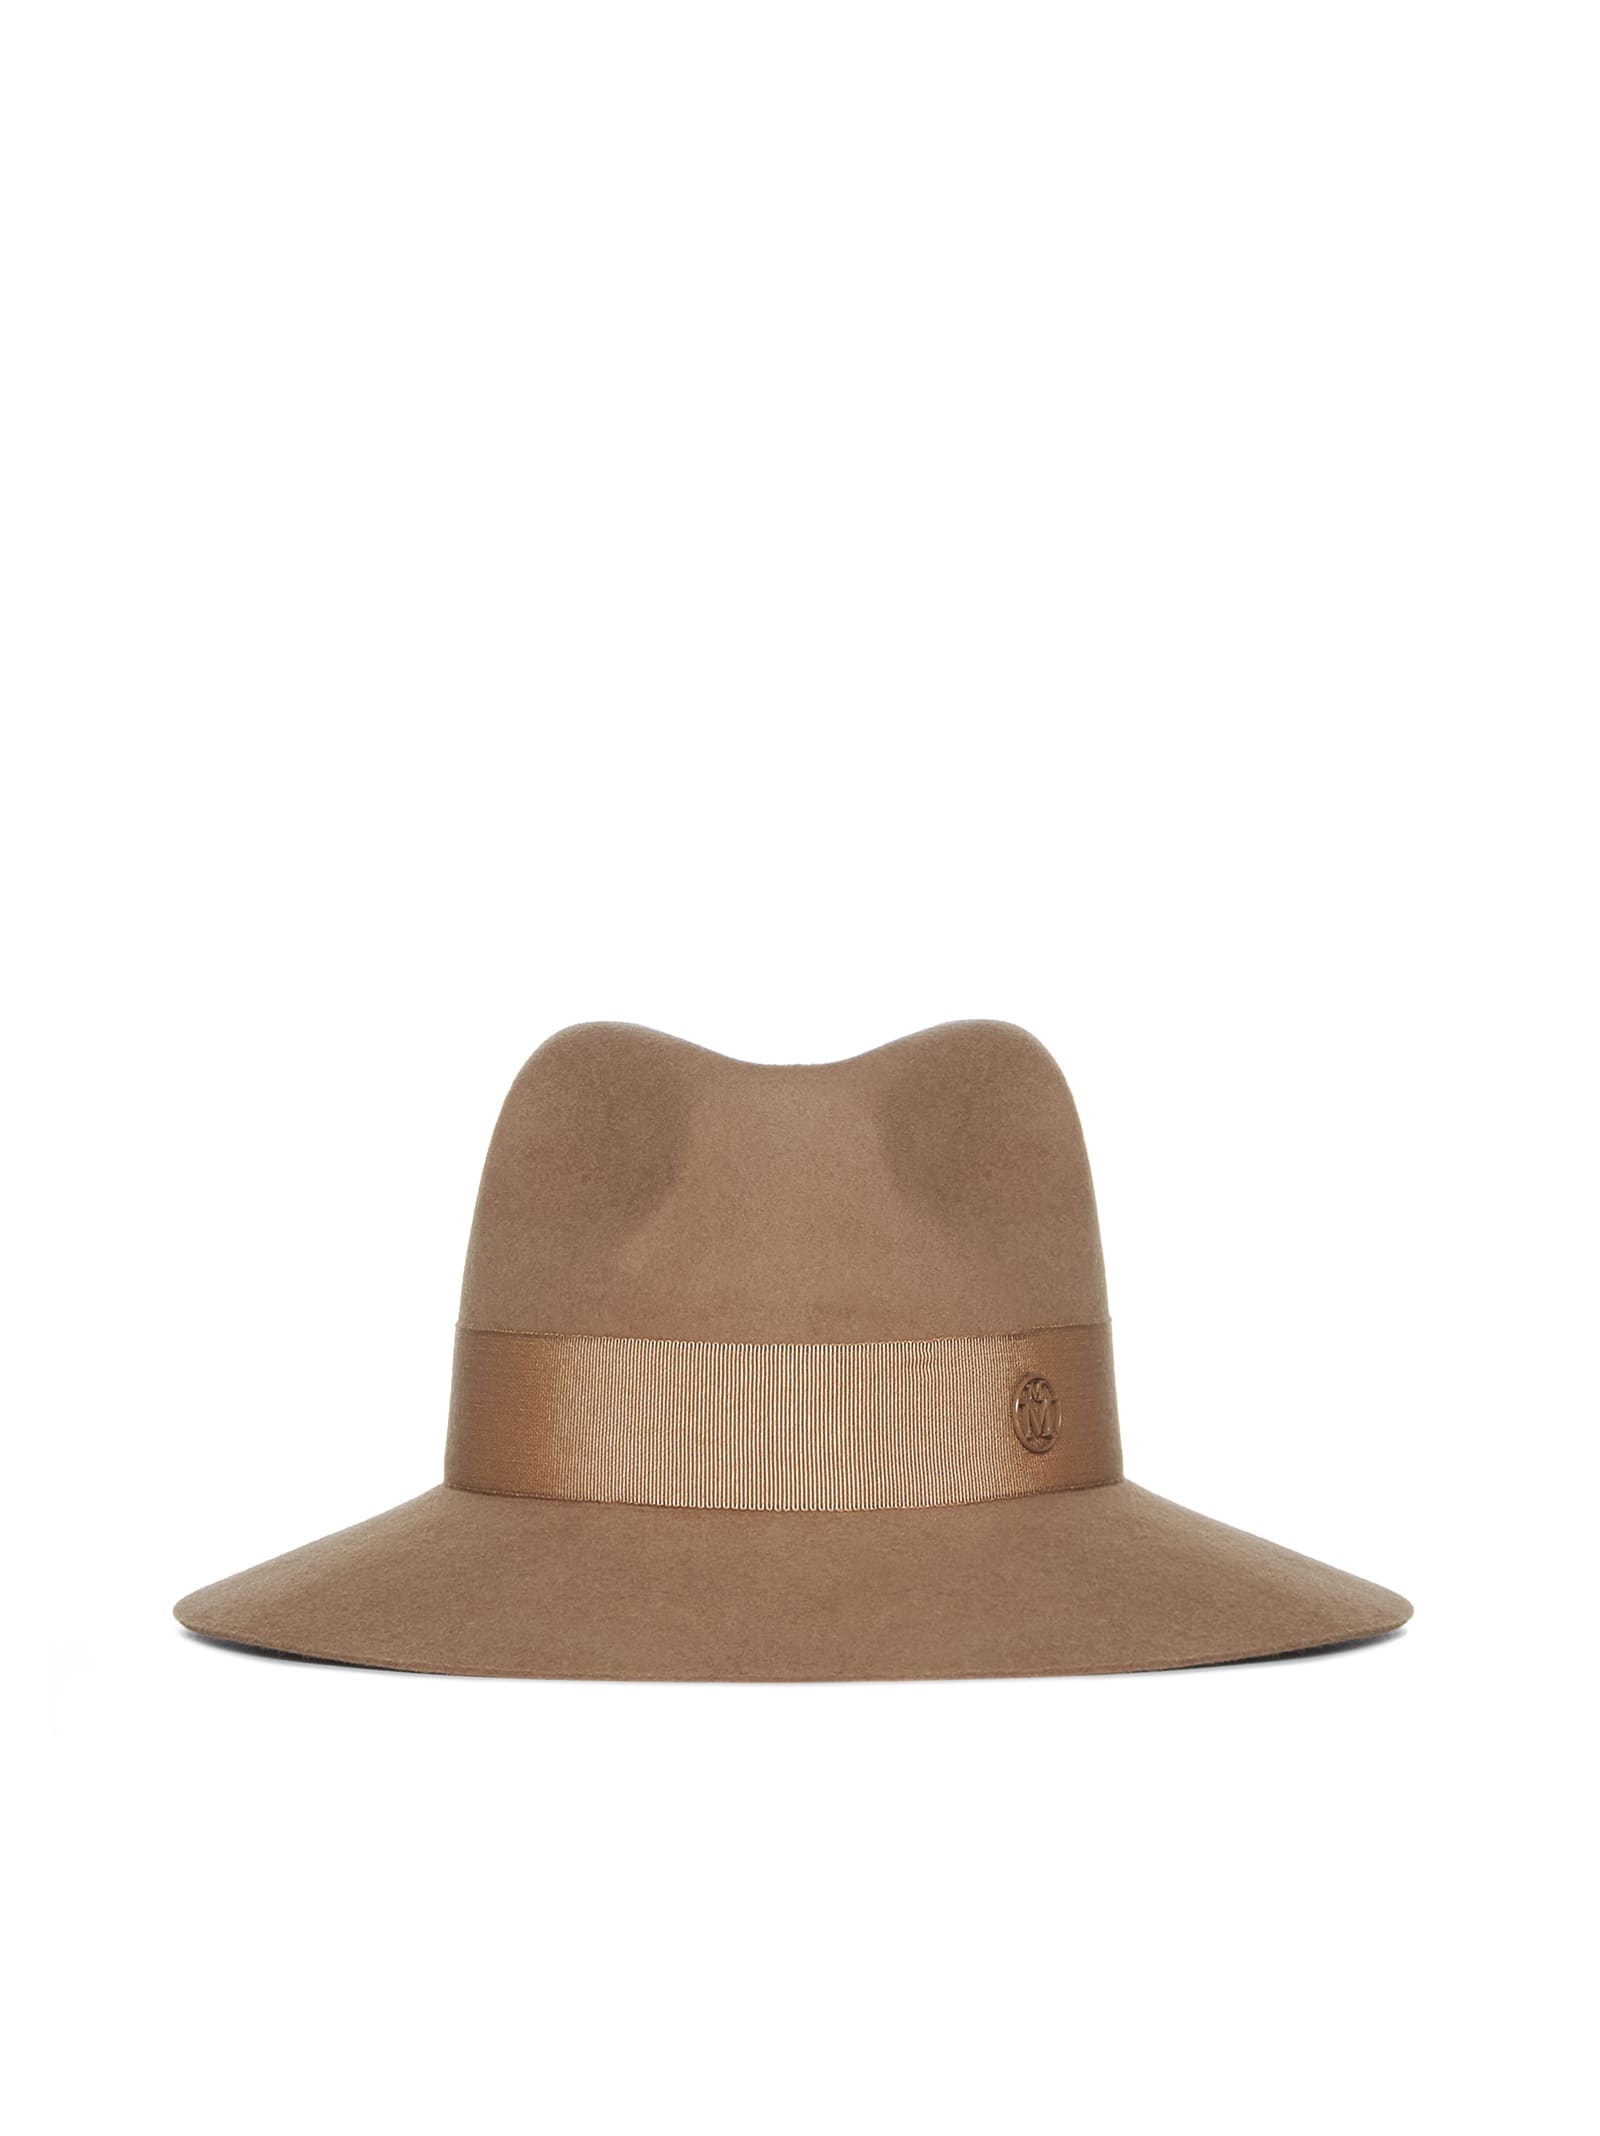 Maison Michel Hat In Camel